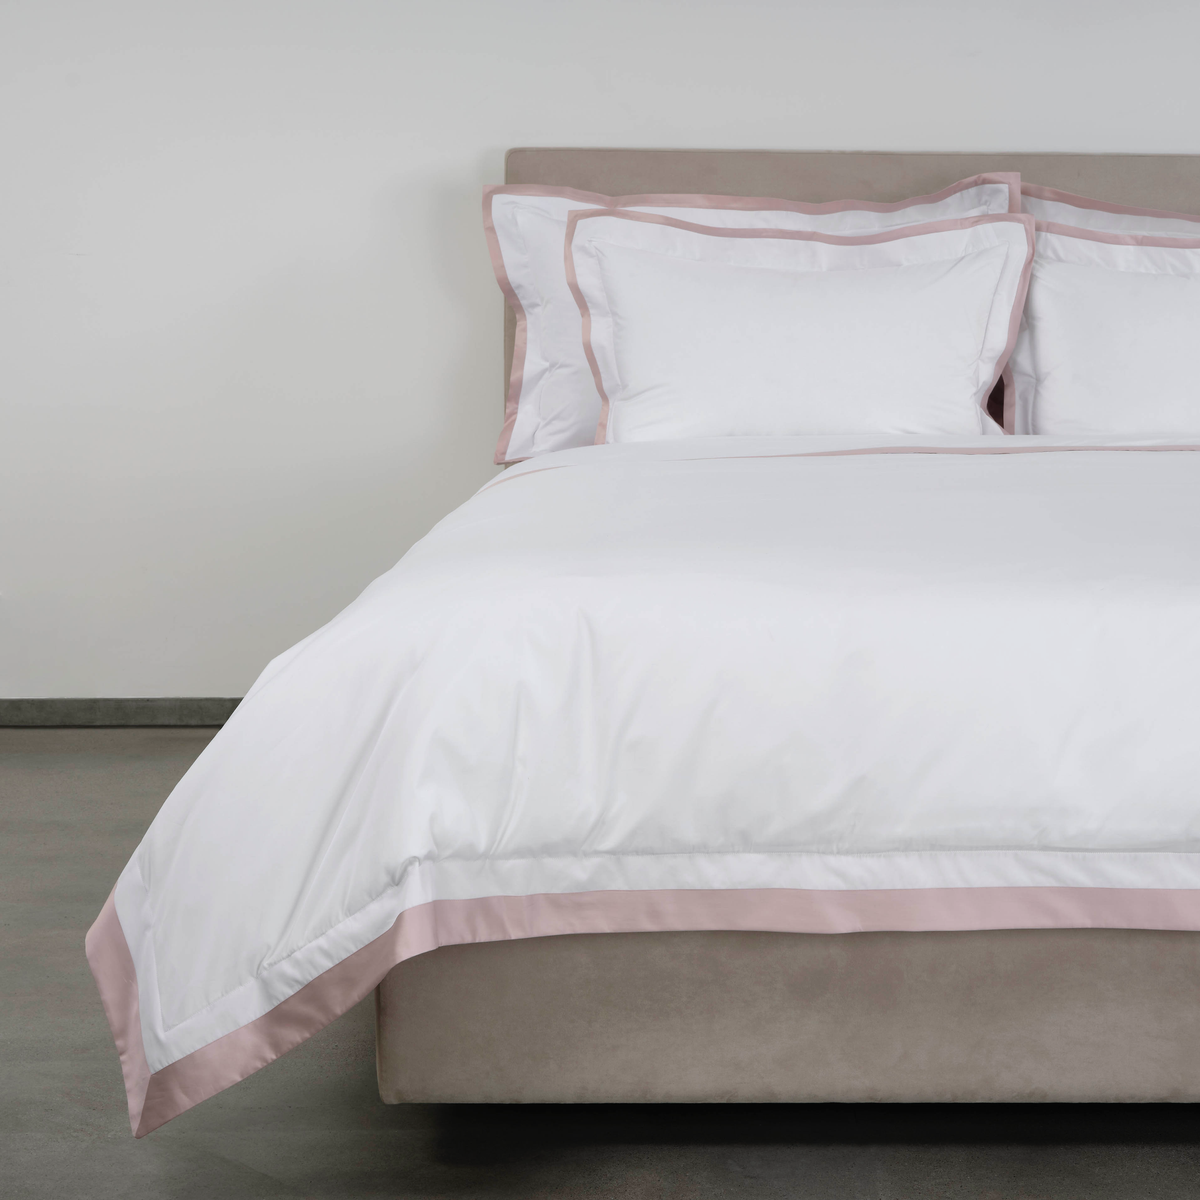 Corner View of Full Bed Dressed in Celso de Lemos Hella Bedding in Nuage Rose Color